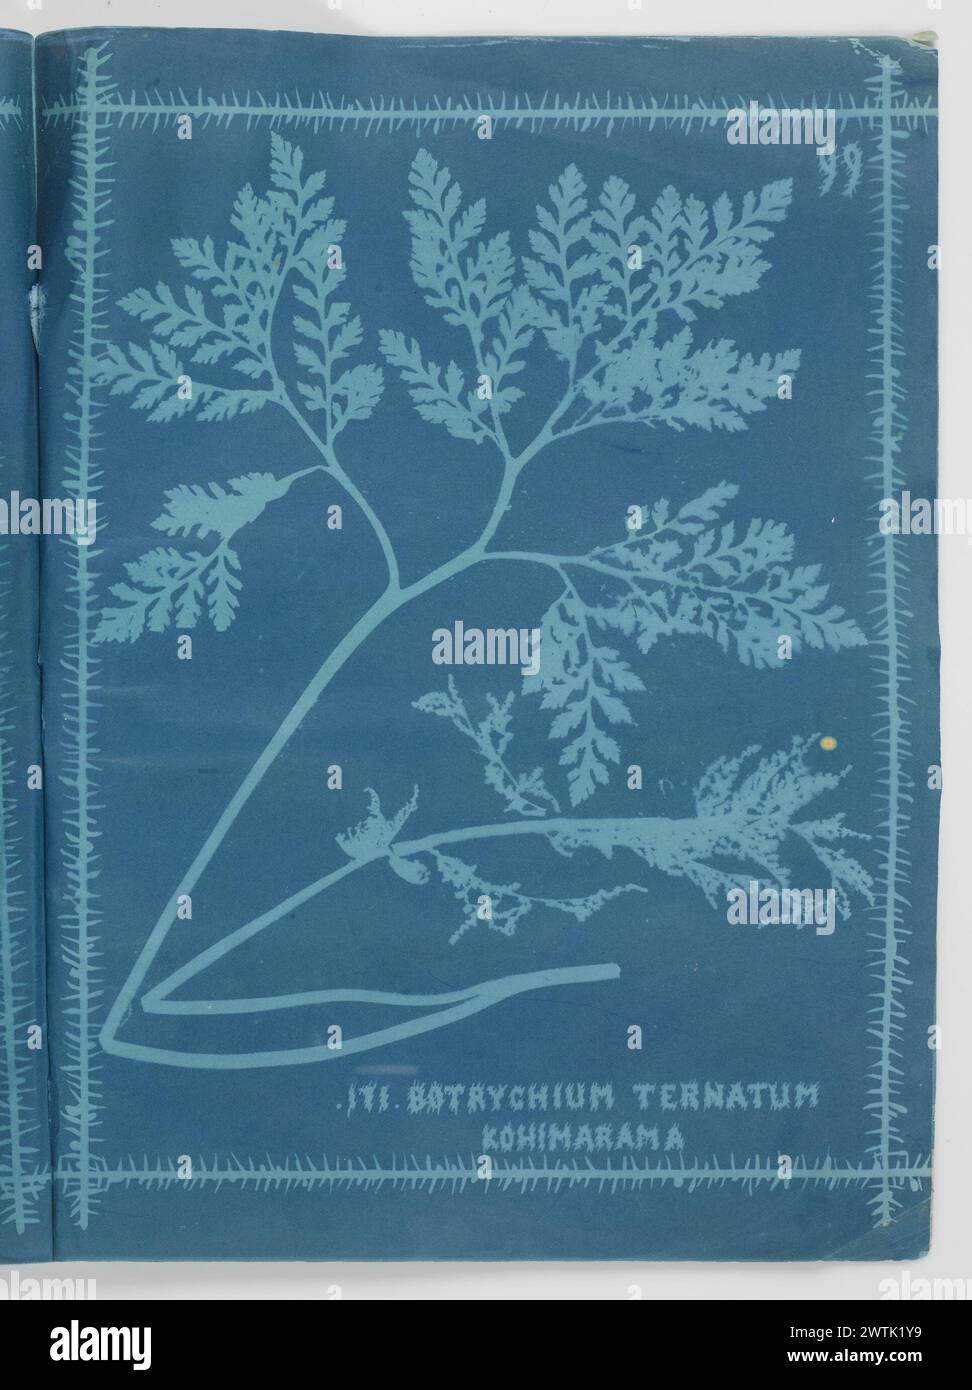 Botrychium ternatum, Kohimarama. From the album: New Zealand ferns. 172 varieties cyanotypes, photographic prints Stock Photo